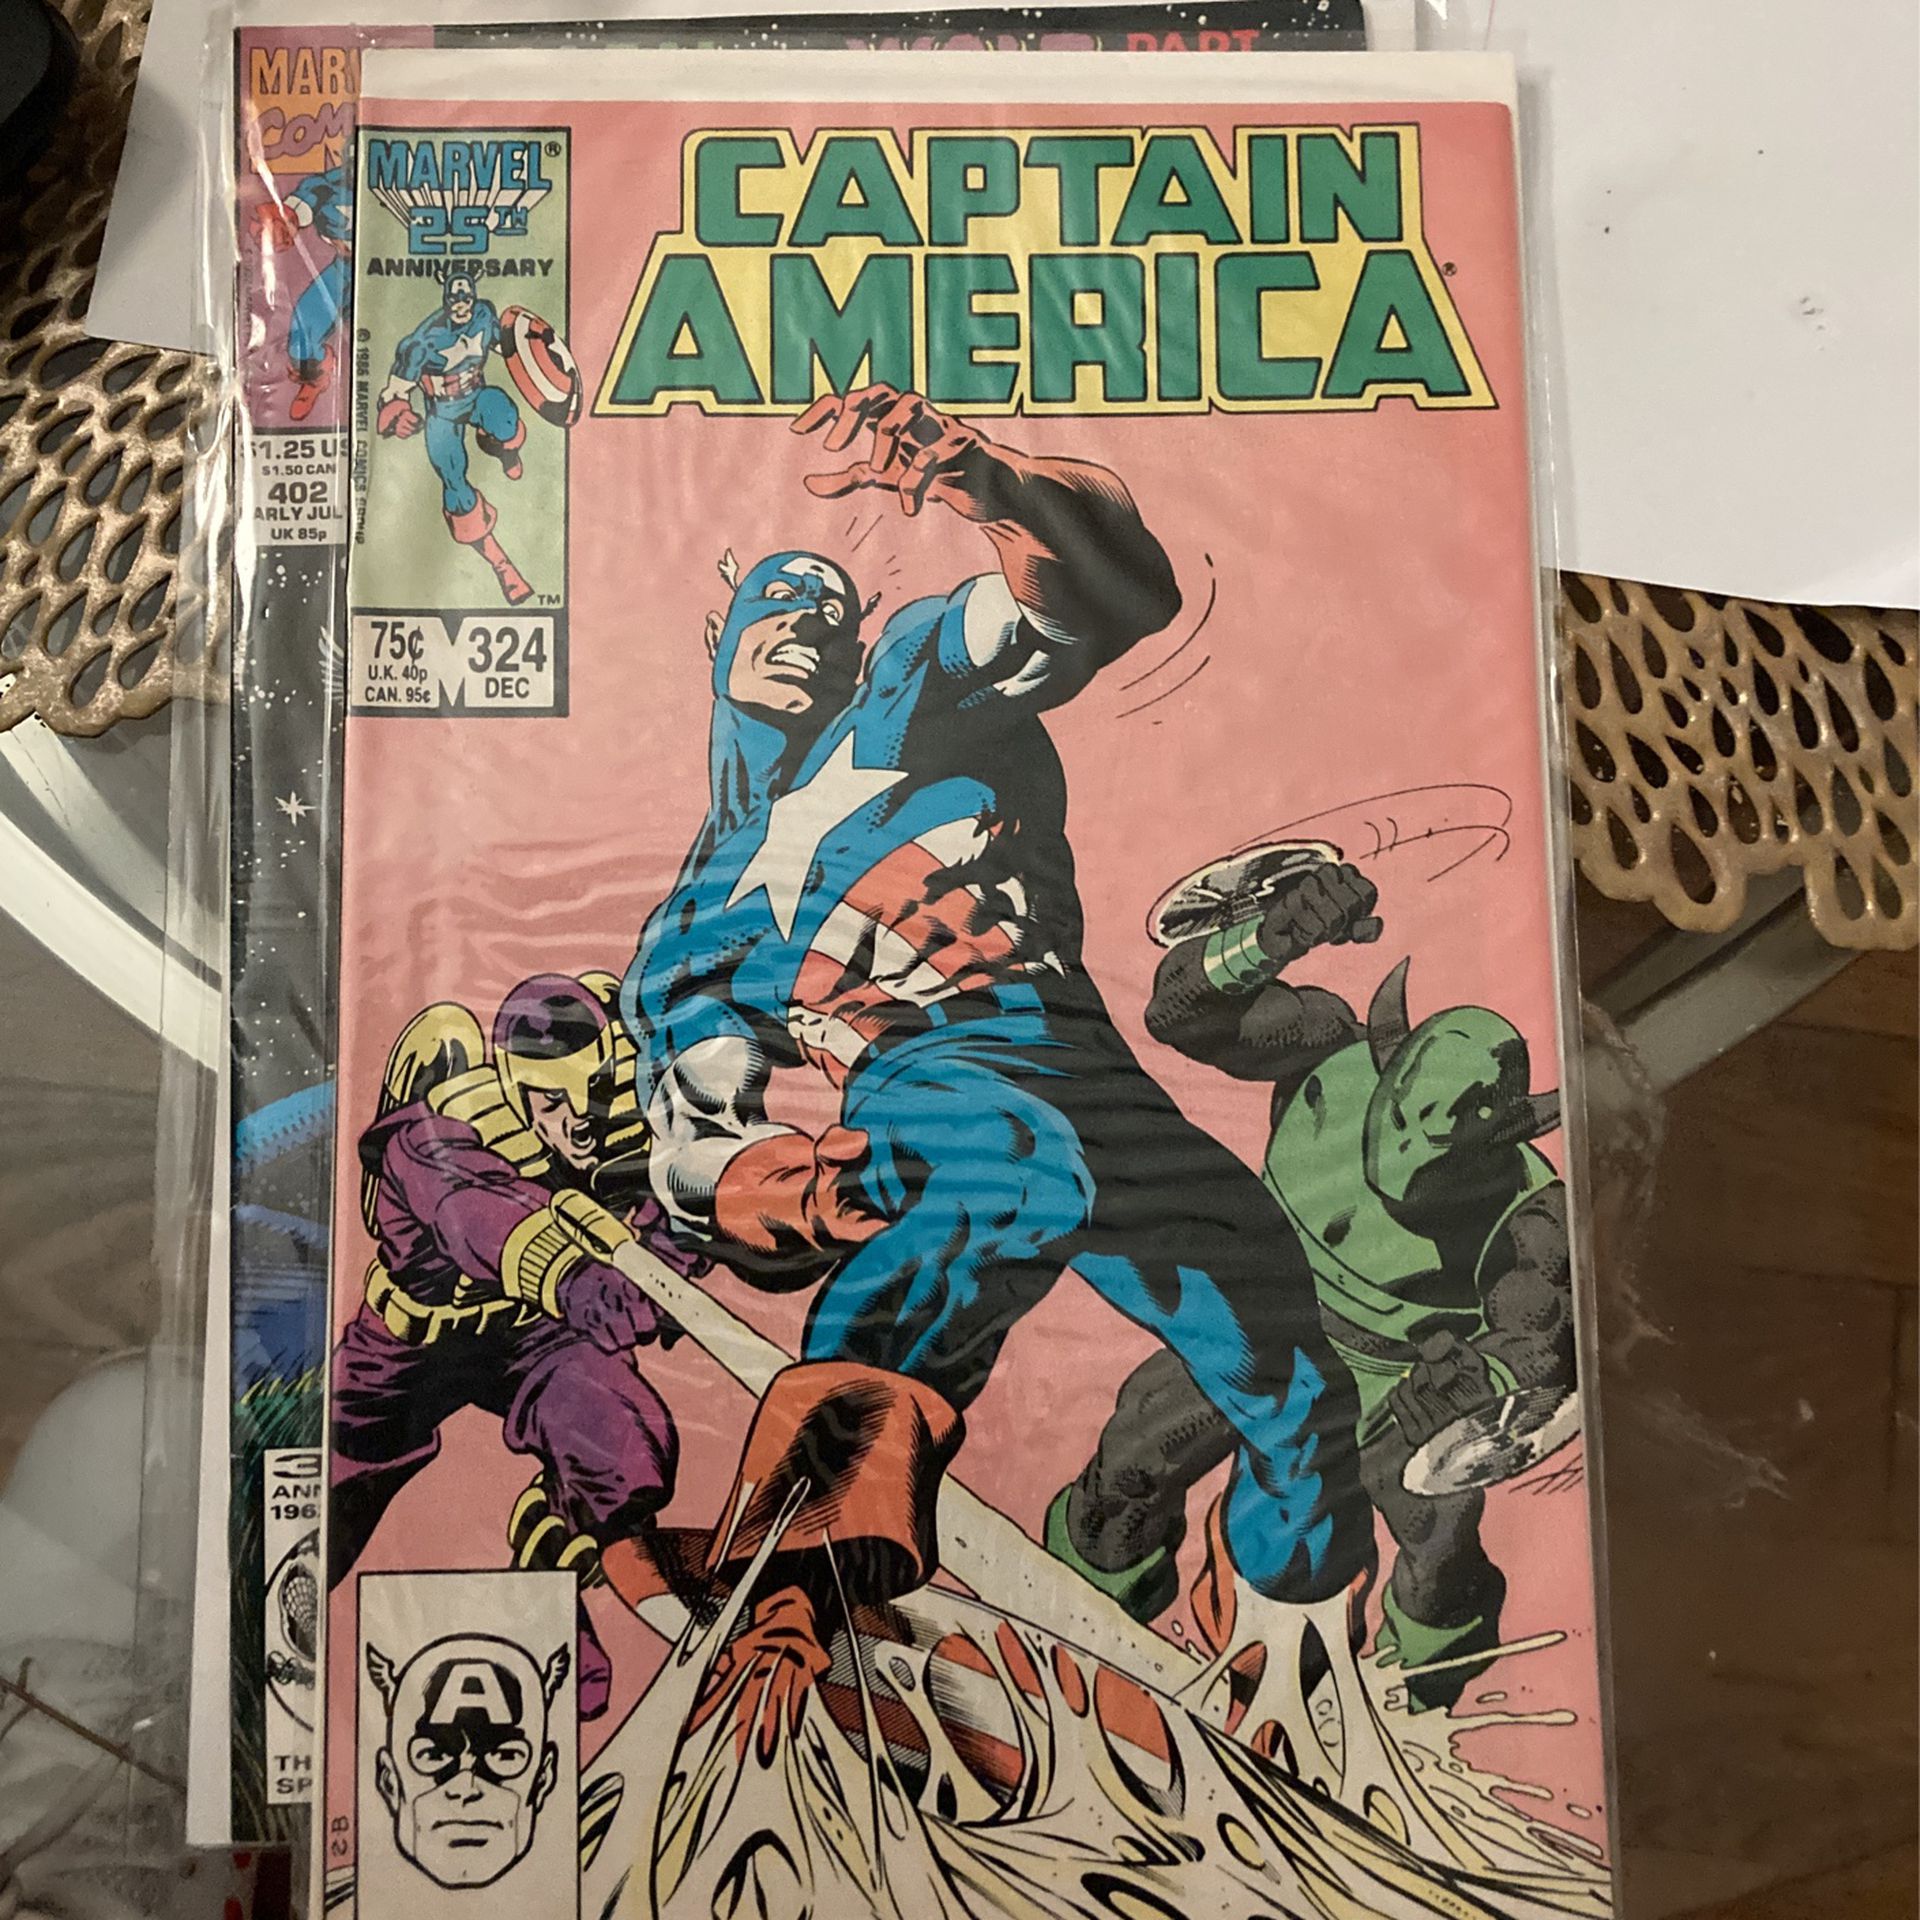 Marvel 25 anniversary Captain America